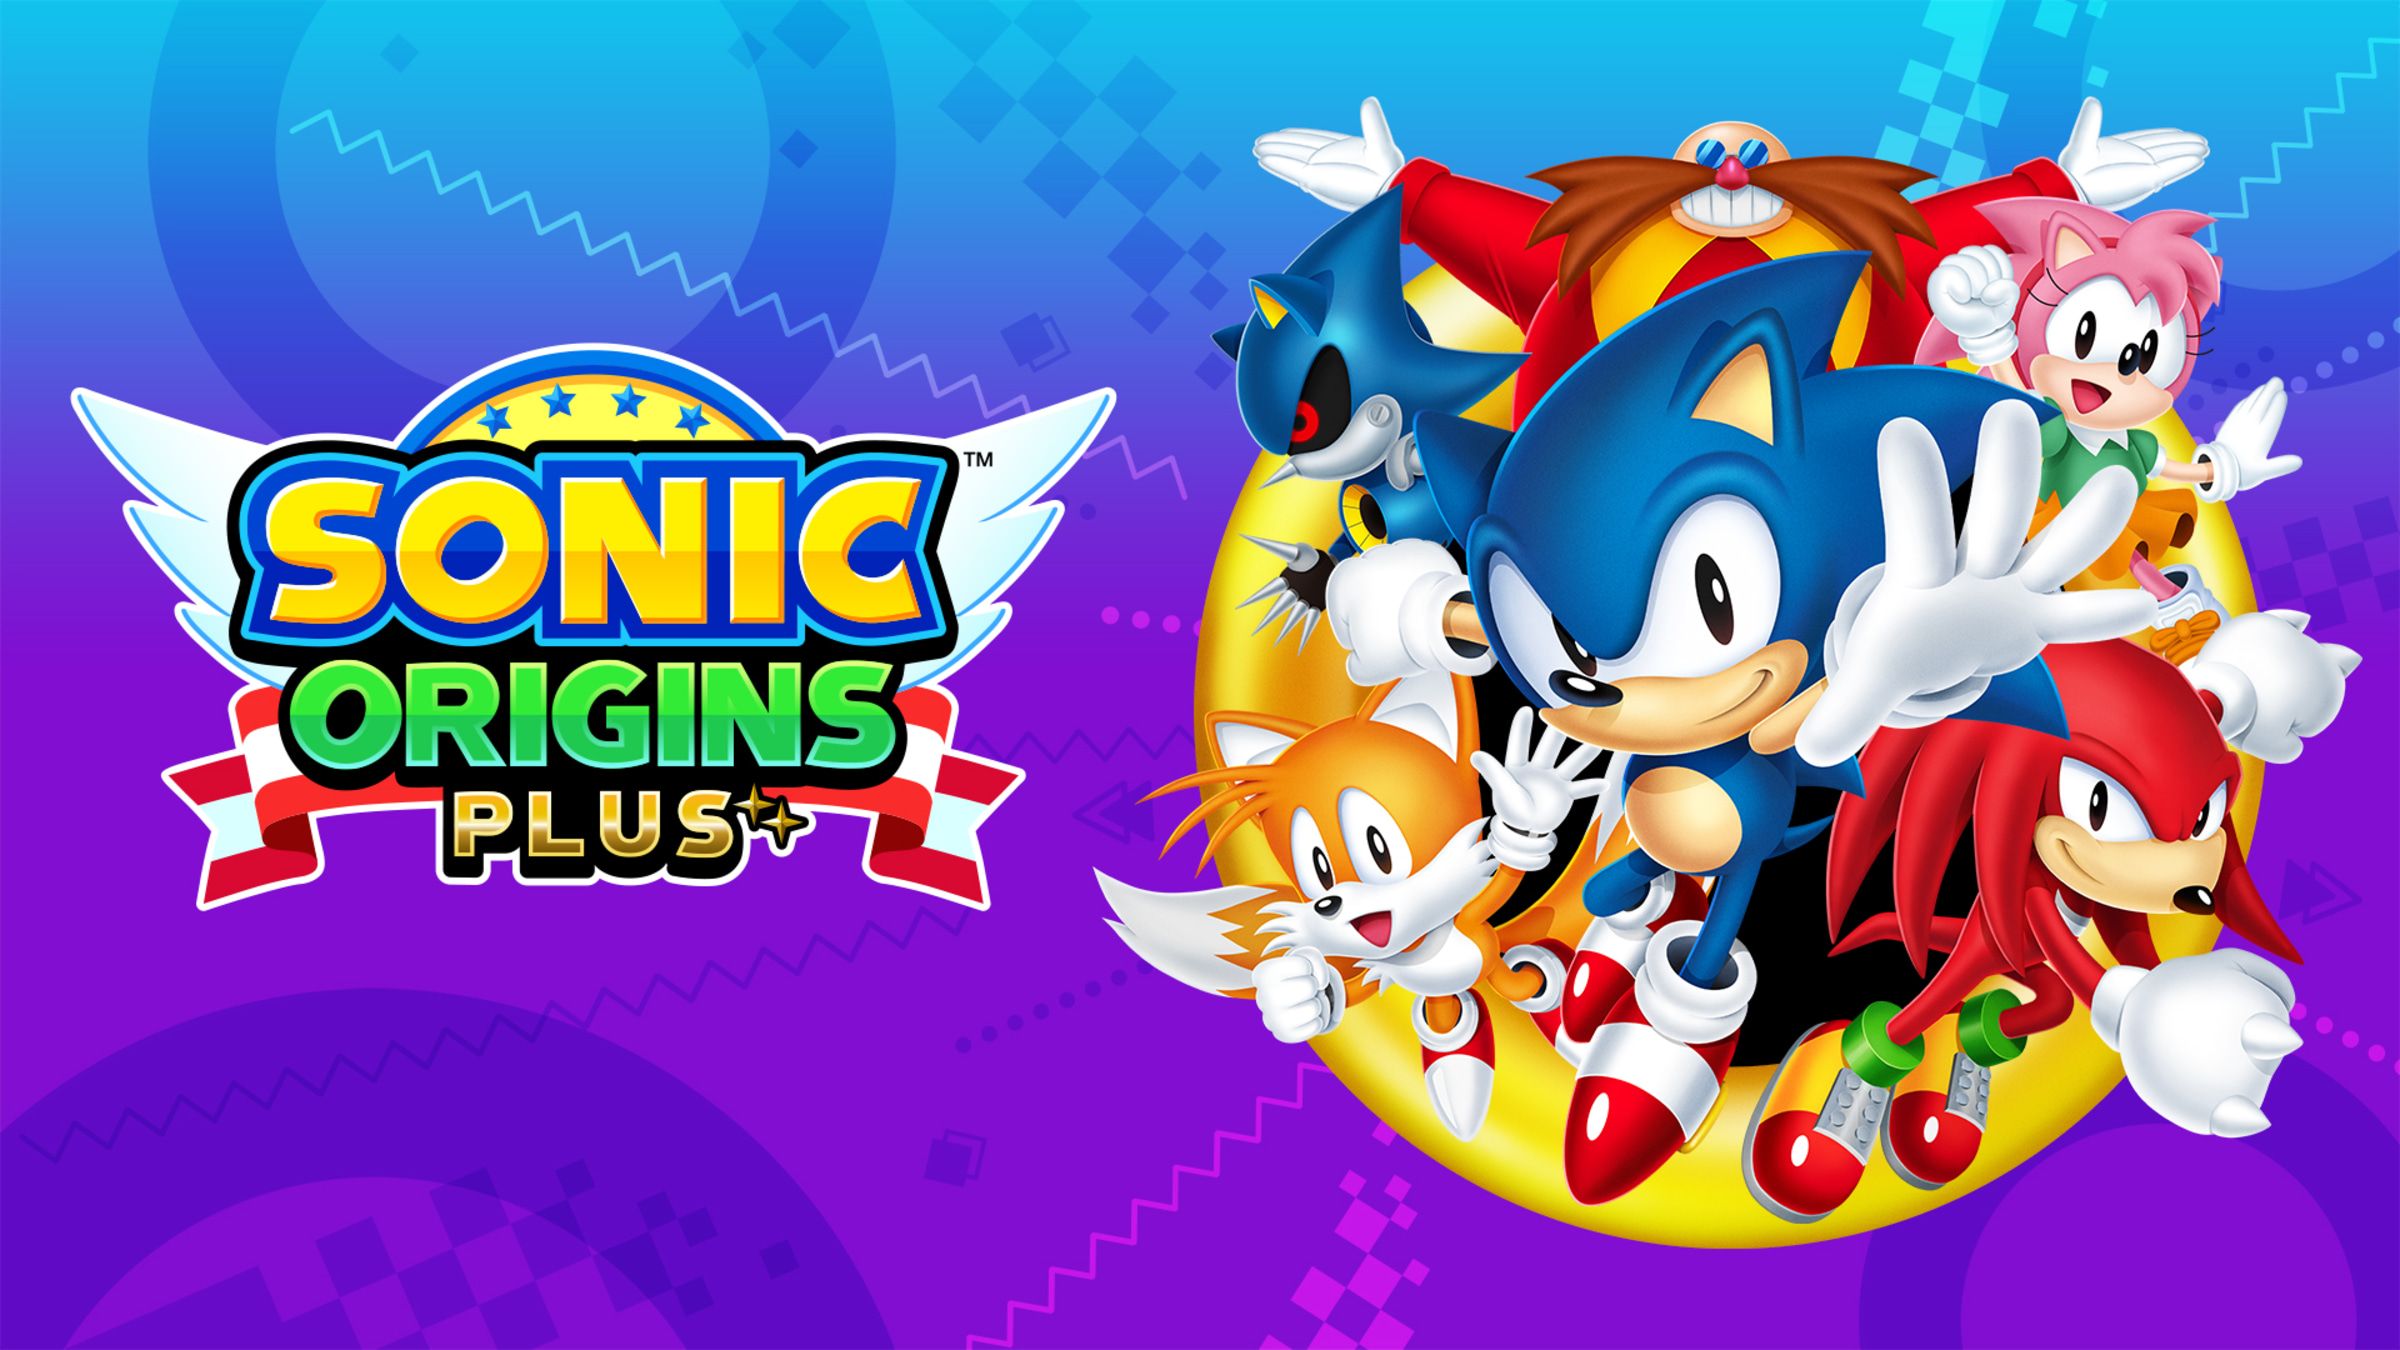 Buy Sonic Origins